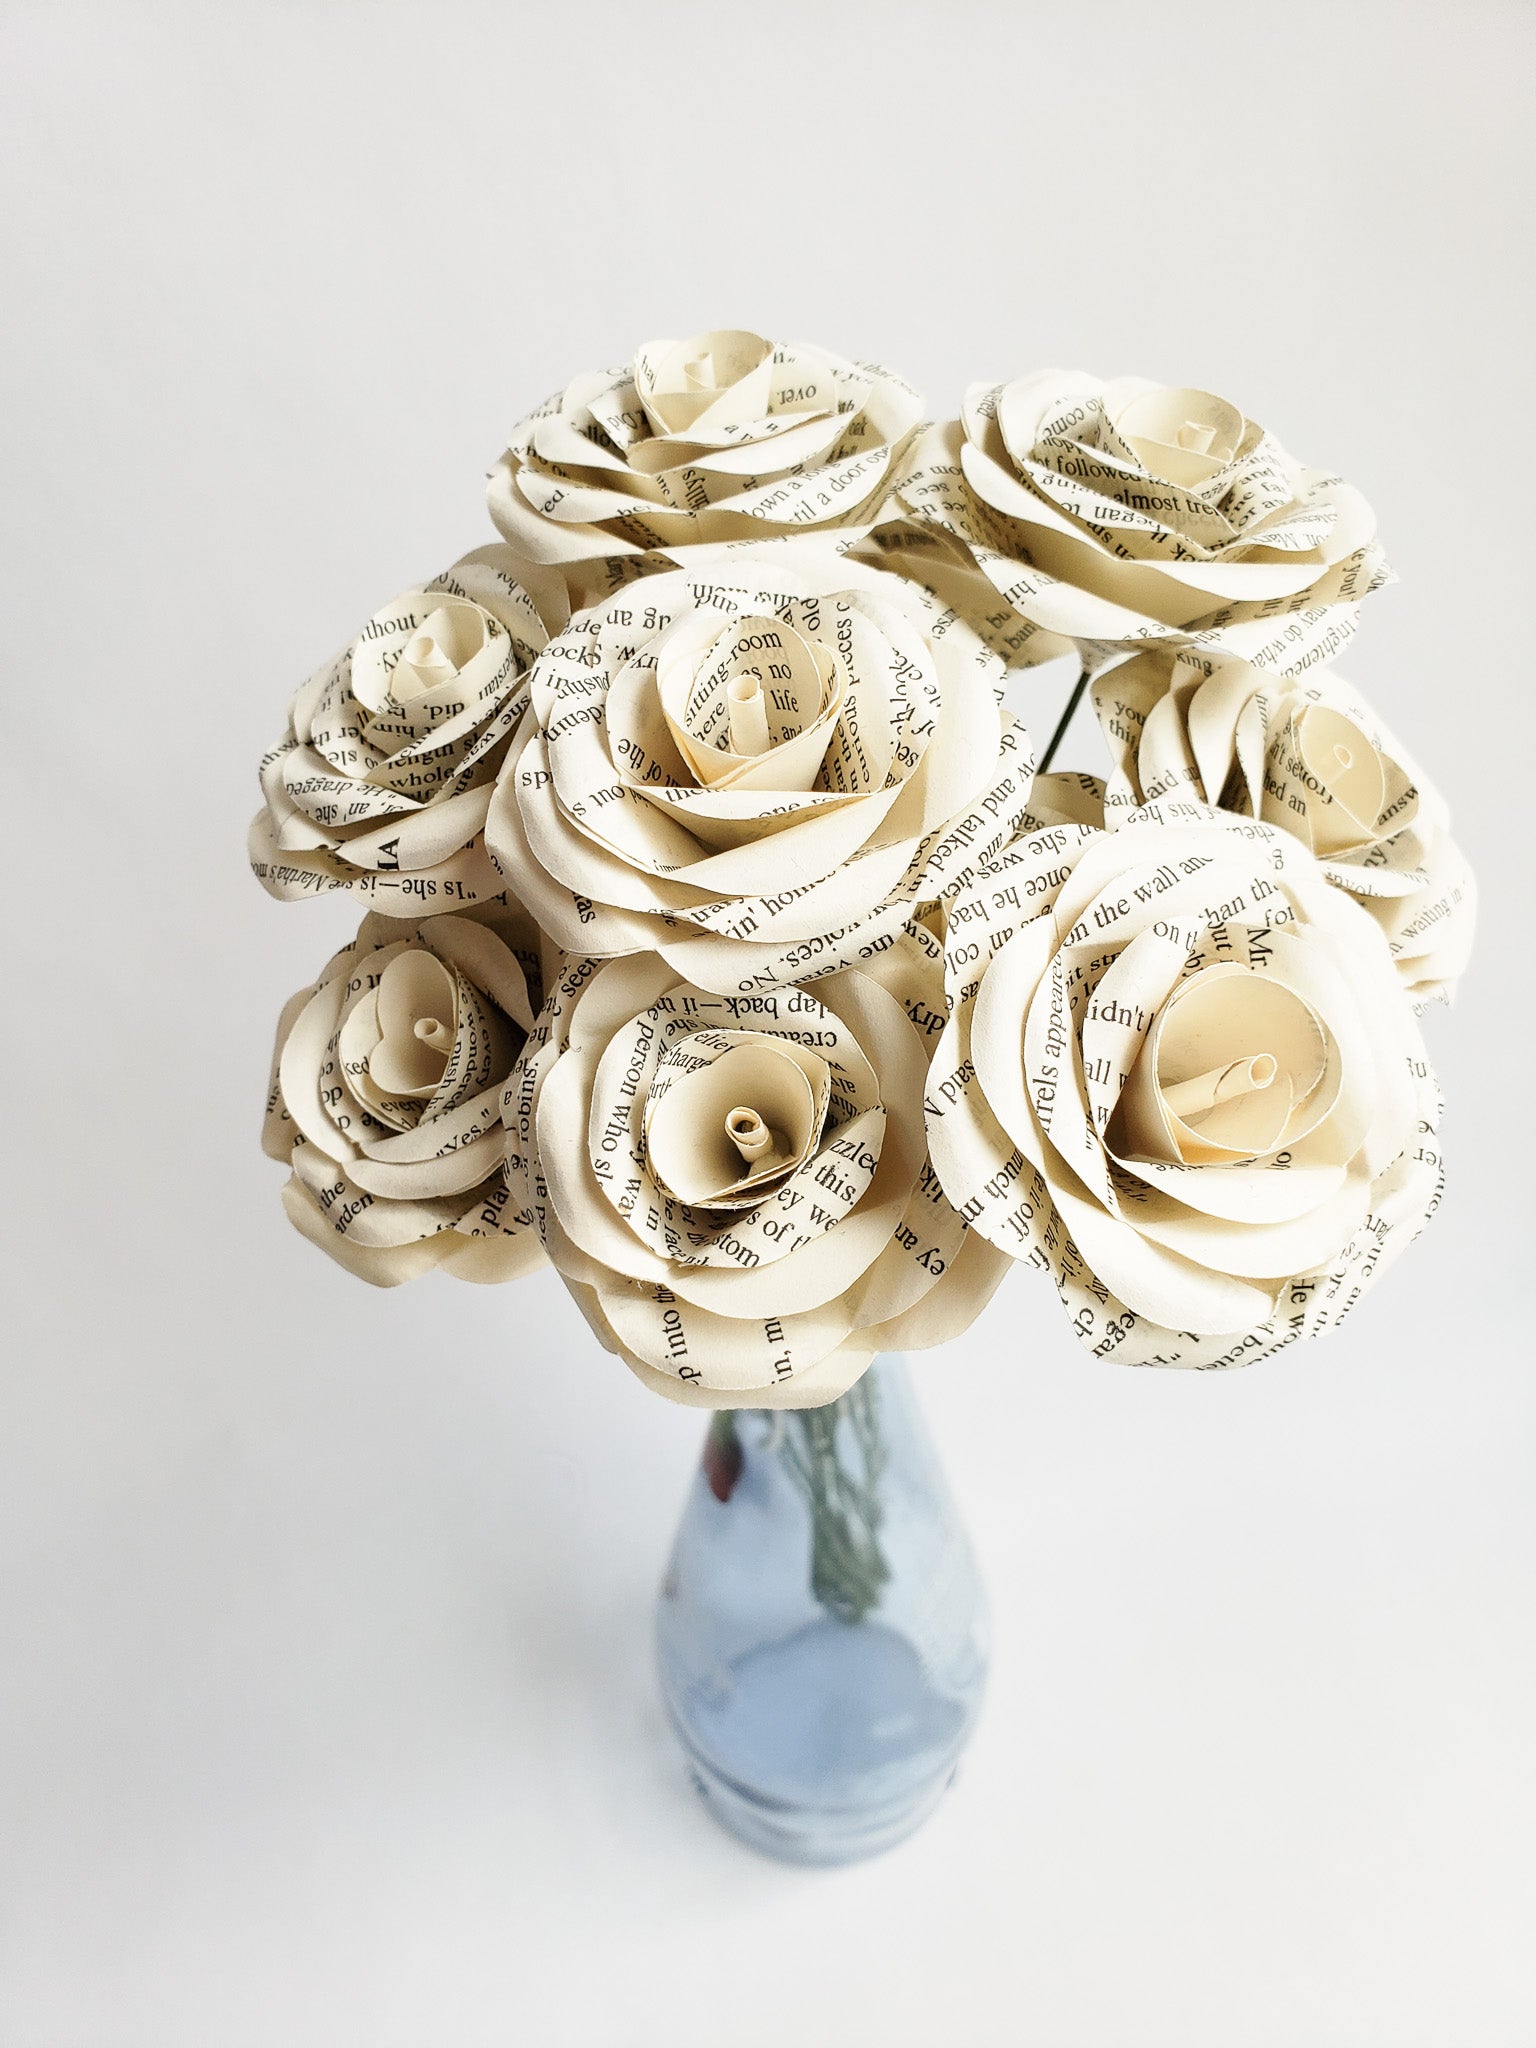 Paper Flower Bouquet 